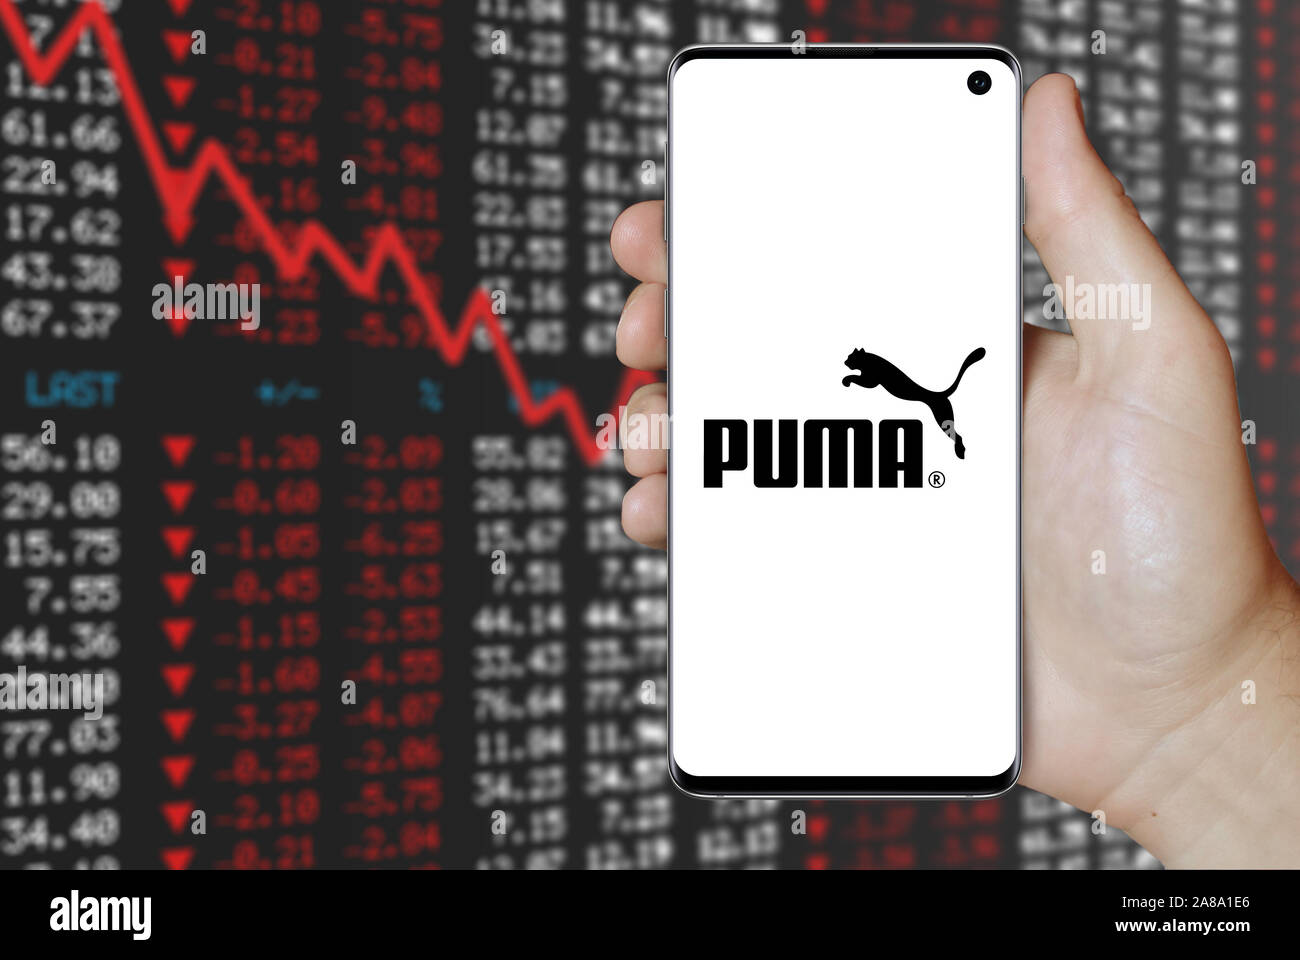 puma share price today